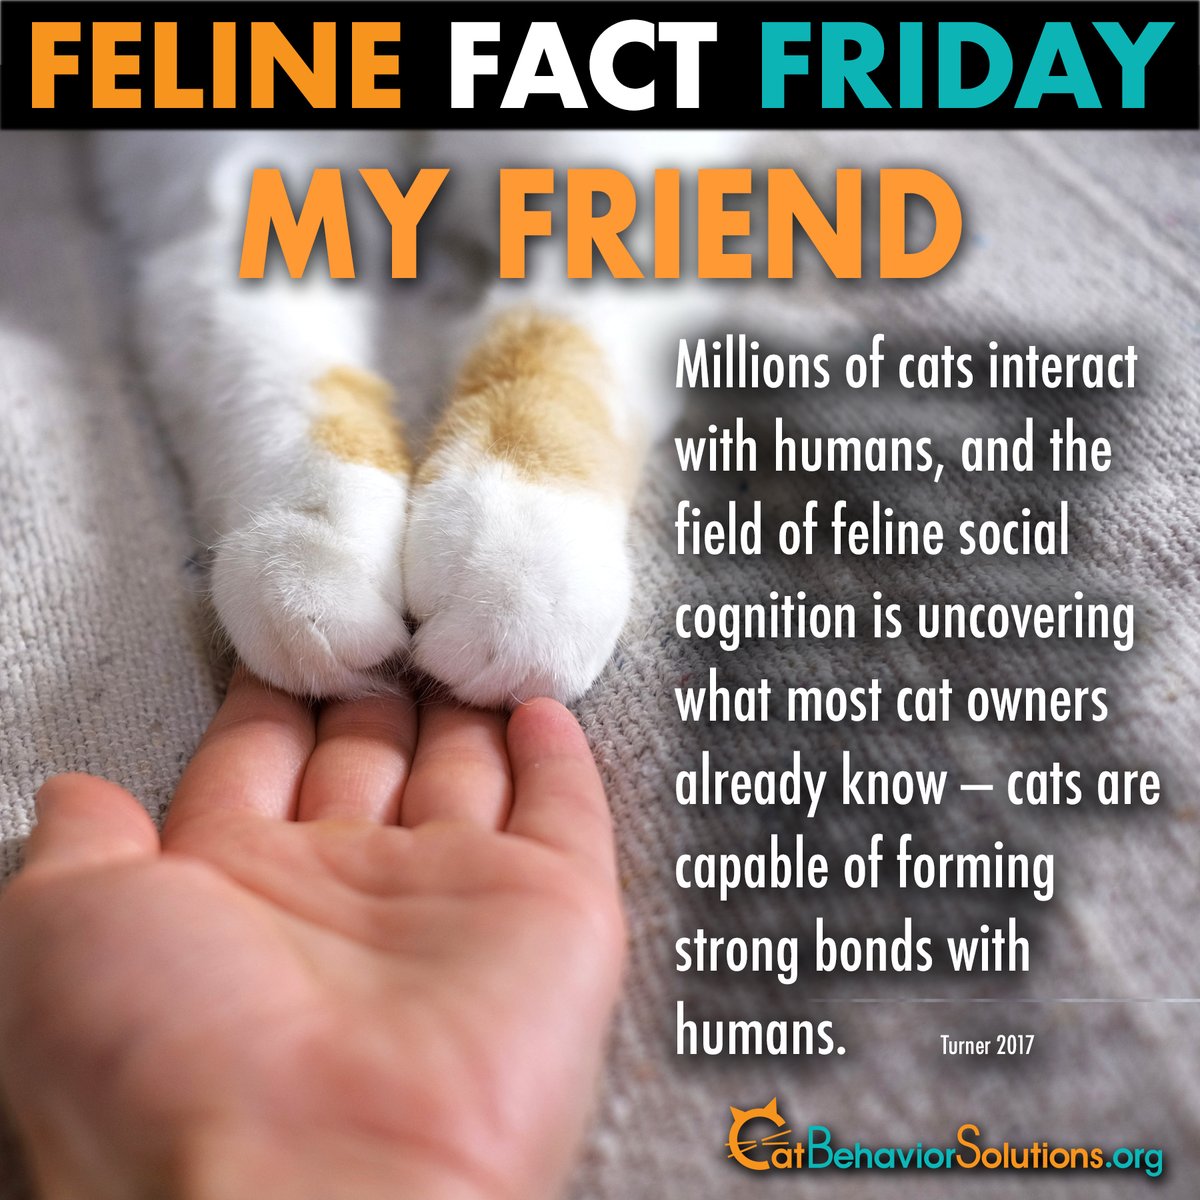 #felinefactfriday #catbehaviorsolutions #catsofinstagram #cats #catlovers #lovecats #gato #picodegato #catlove #ilovemycat #cattalkradio #caturdayonaFriday #felinebond #cathumanbond #felinecognition